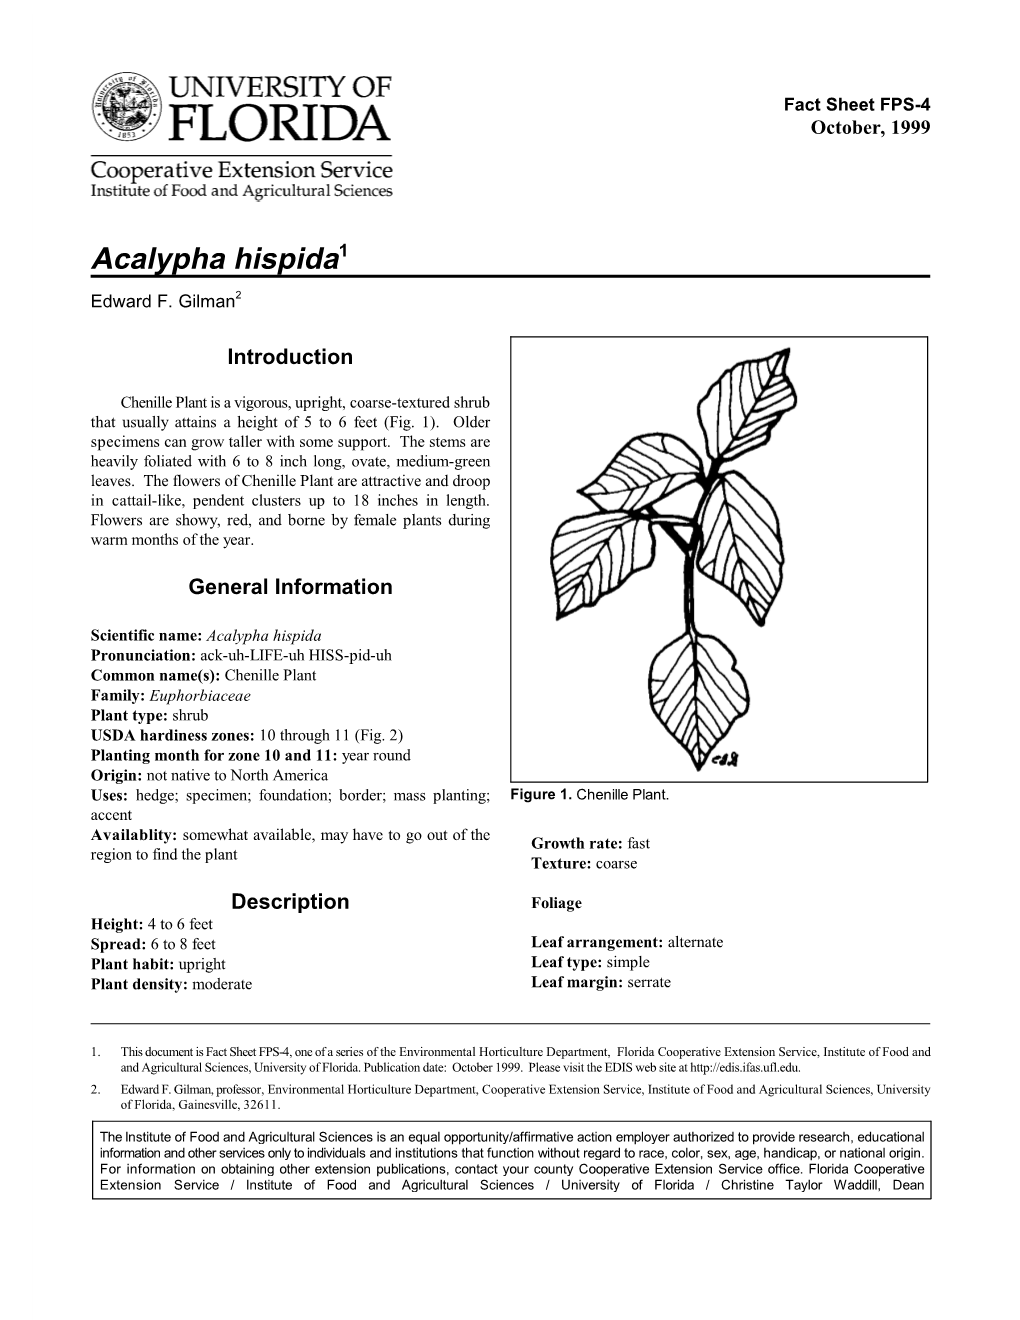 Acalypha Hispida1